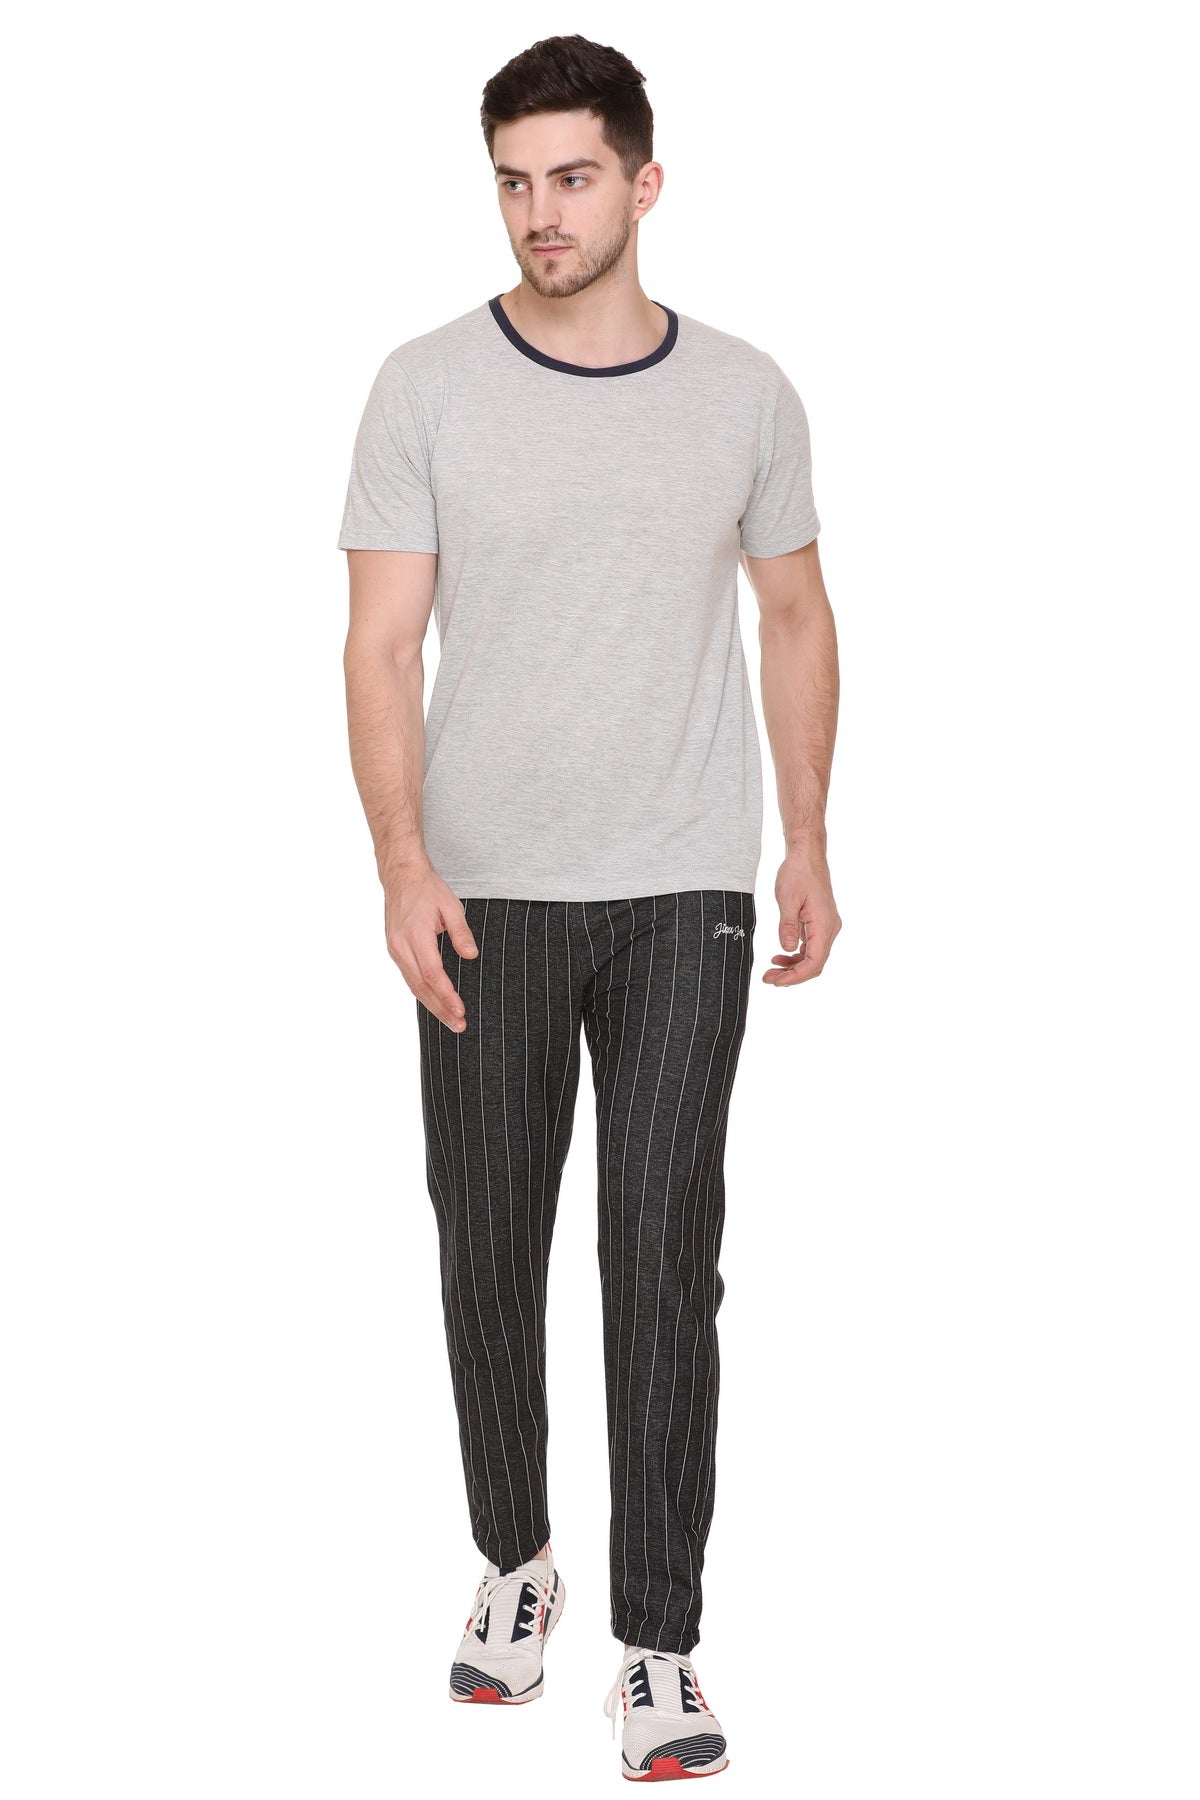 imageJinxer Men Cotton Pajama Pants - Pack of 3 (Blue, Black & Grey)